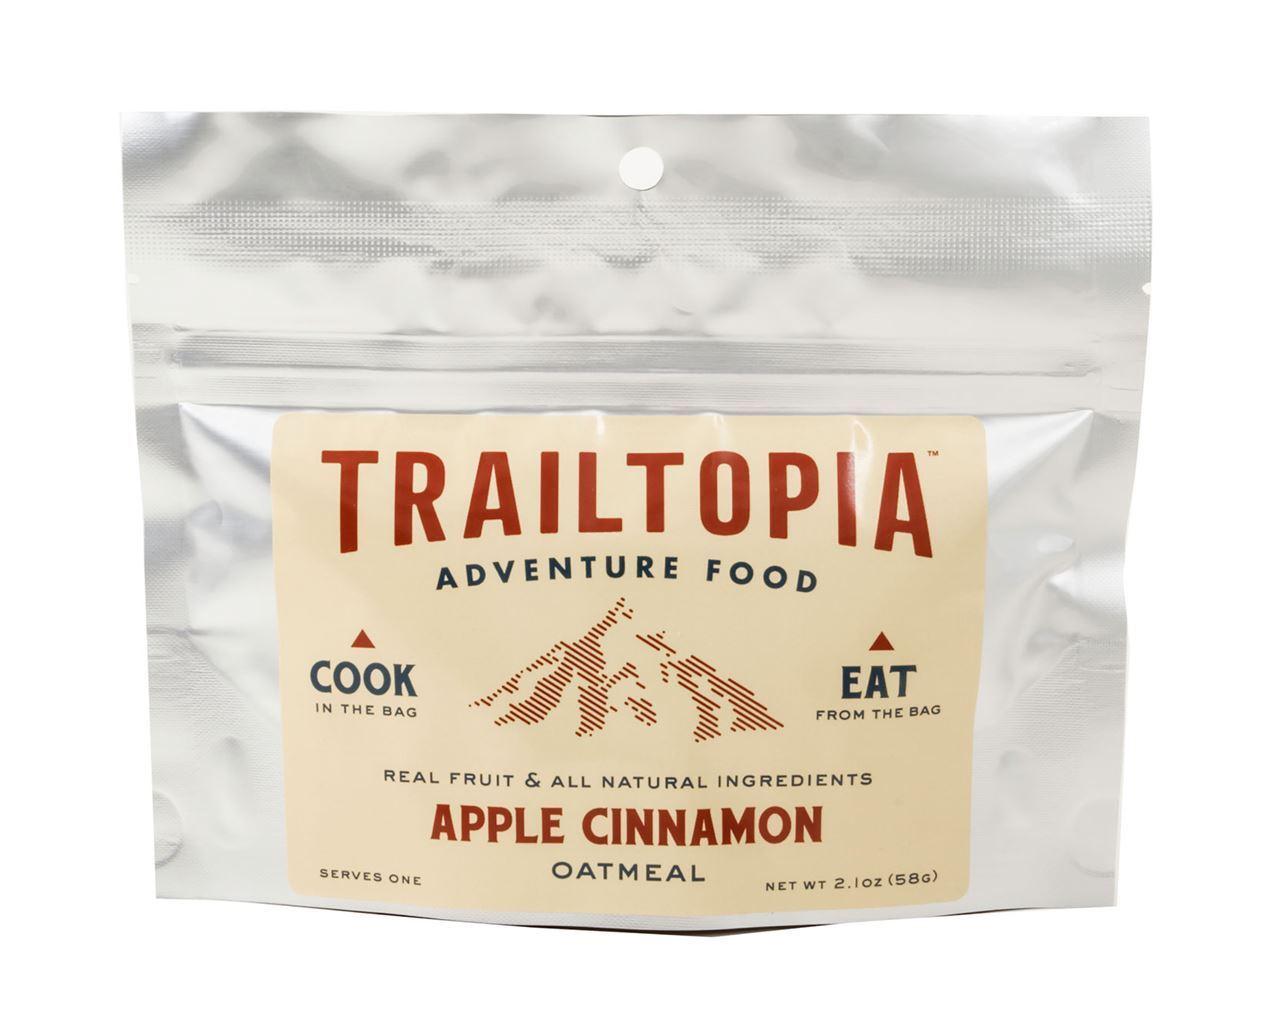 Apple Cinnamon Oatmeal